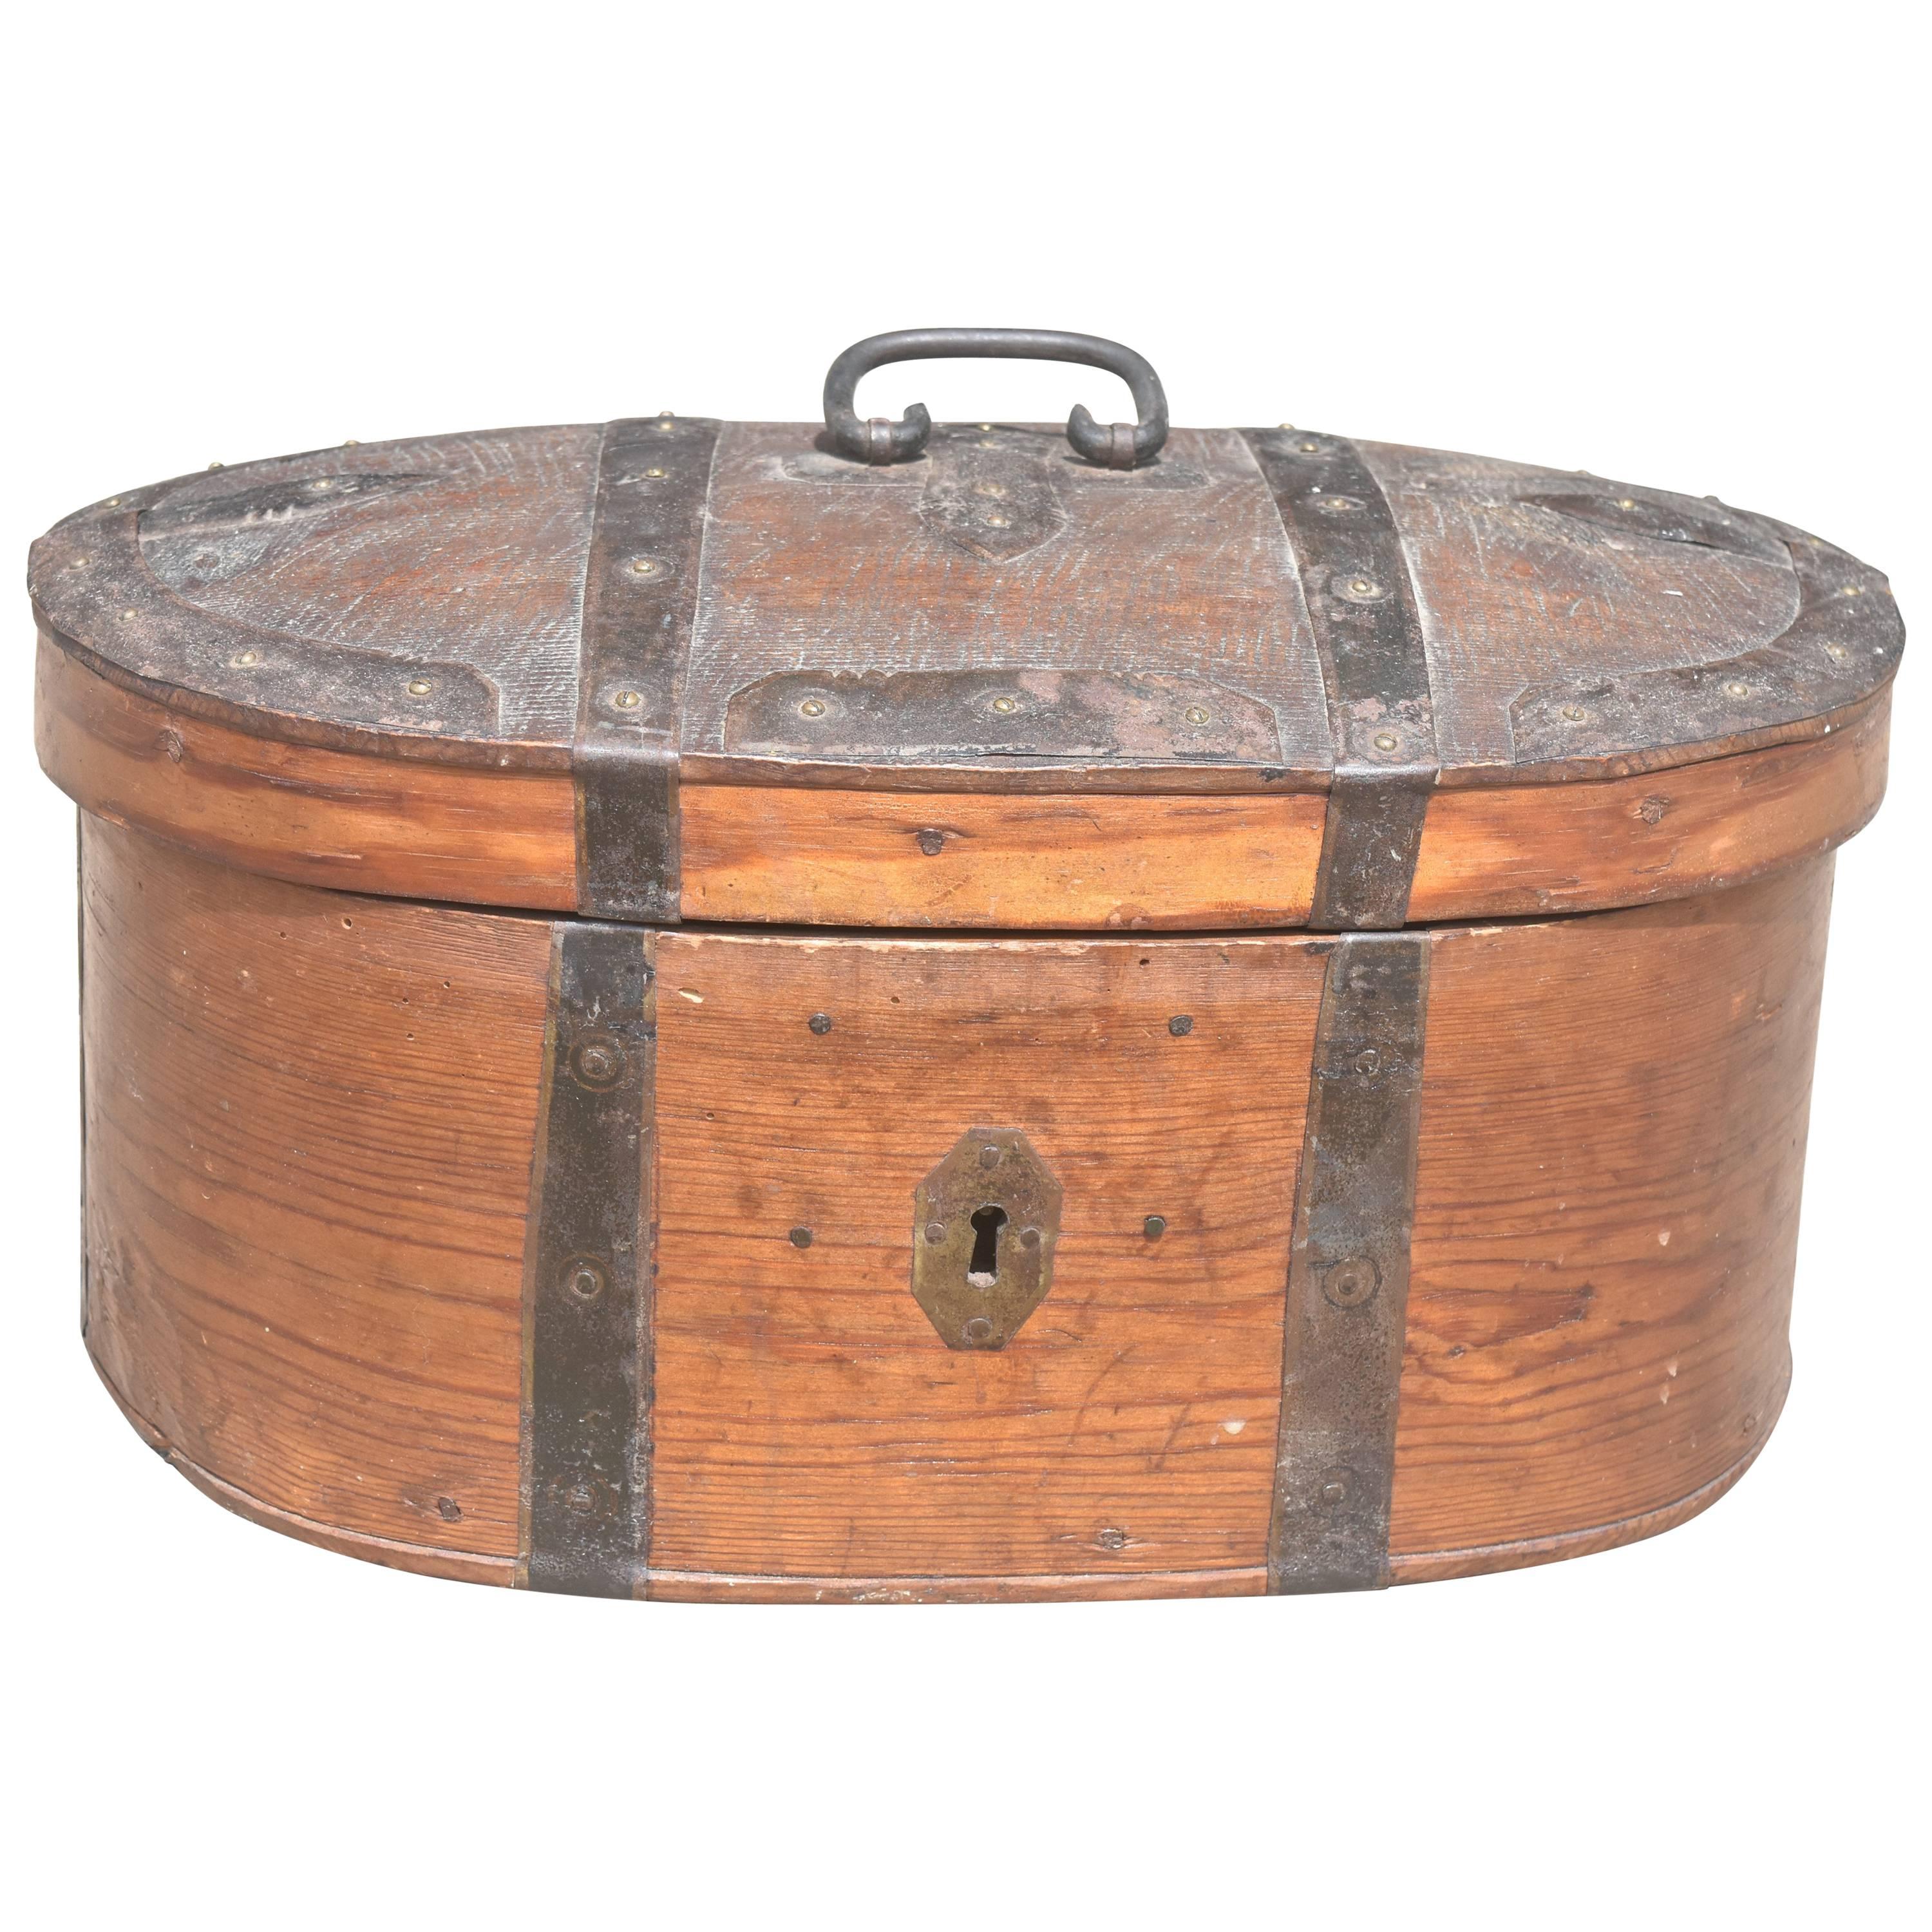 19th Century Swedish Wooden Food Box with Iron Hardware